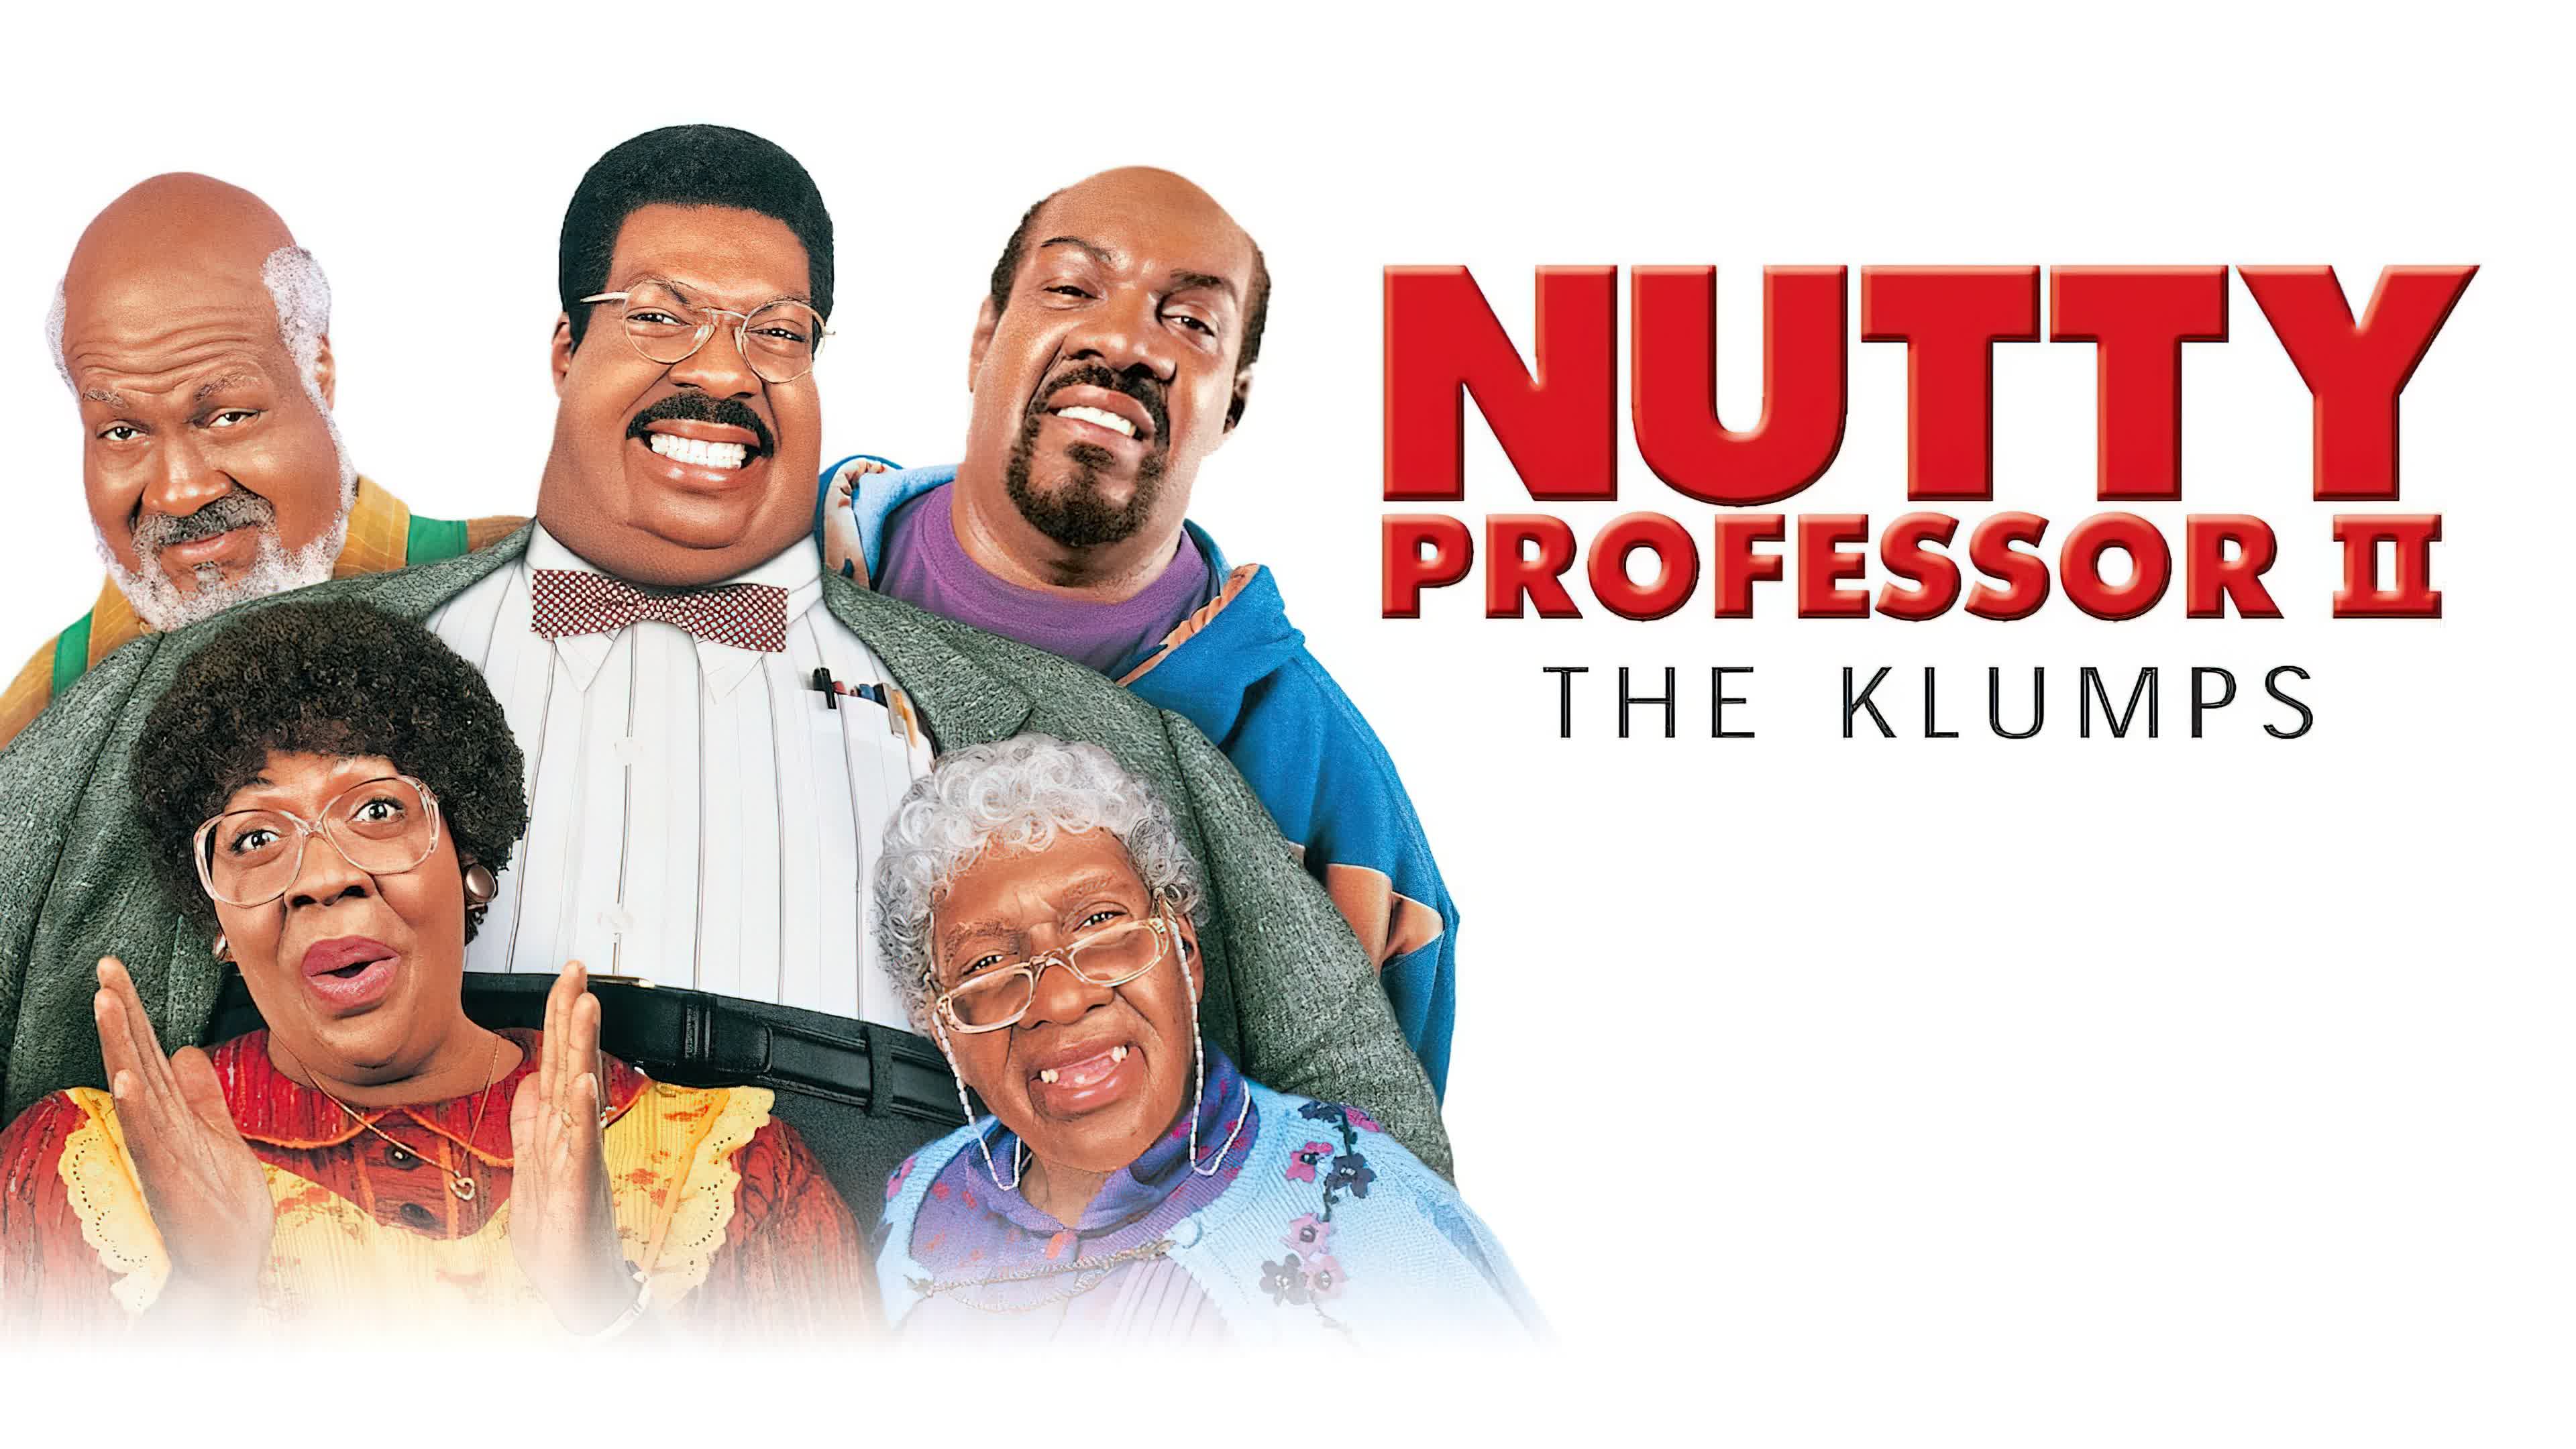 Nutty Professor II The Klumps (2000)